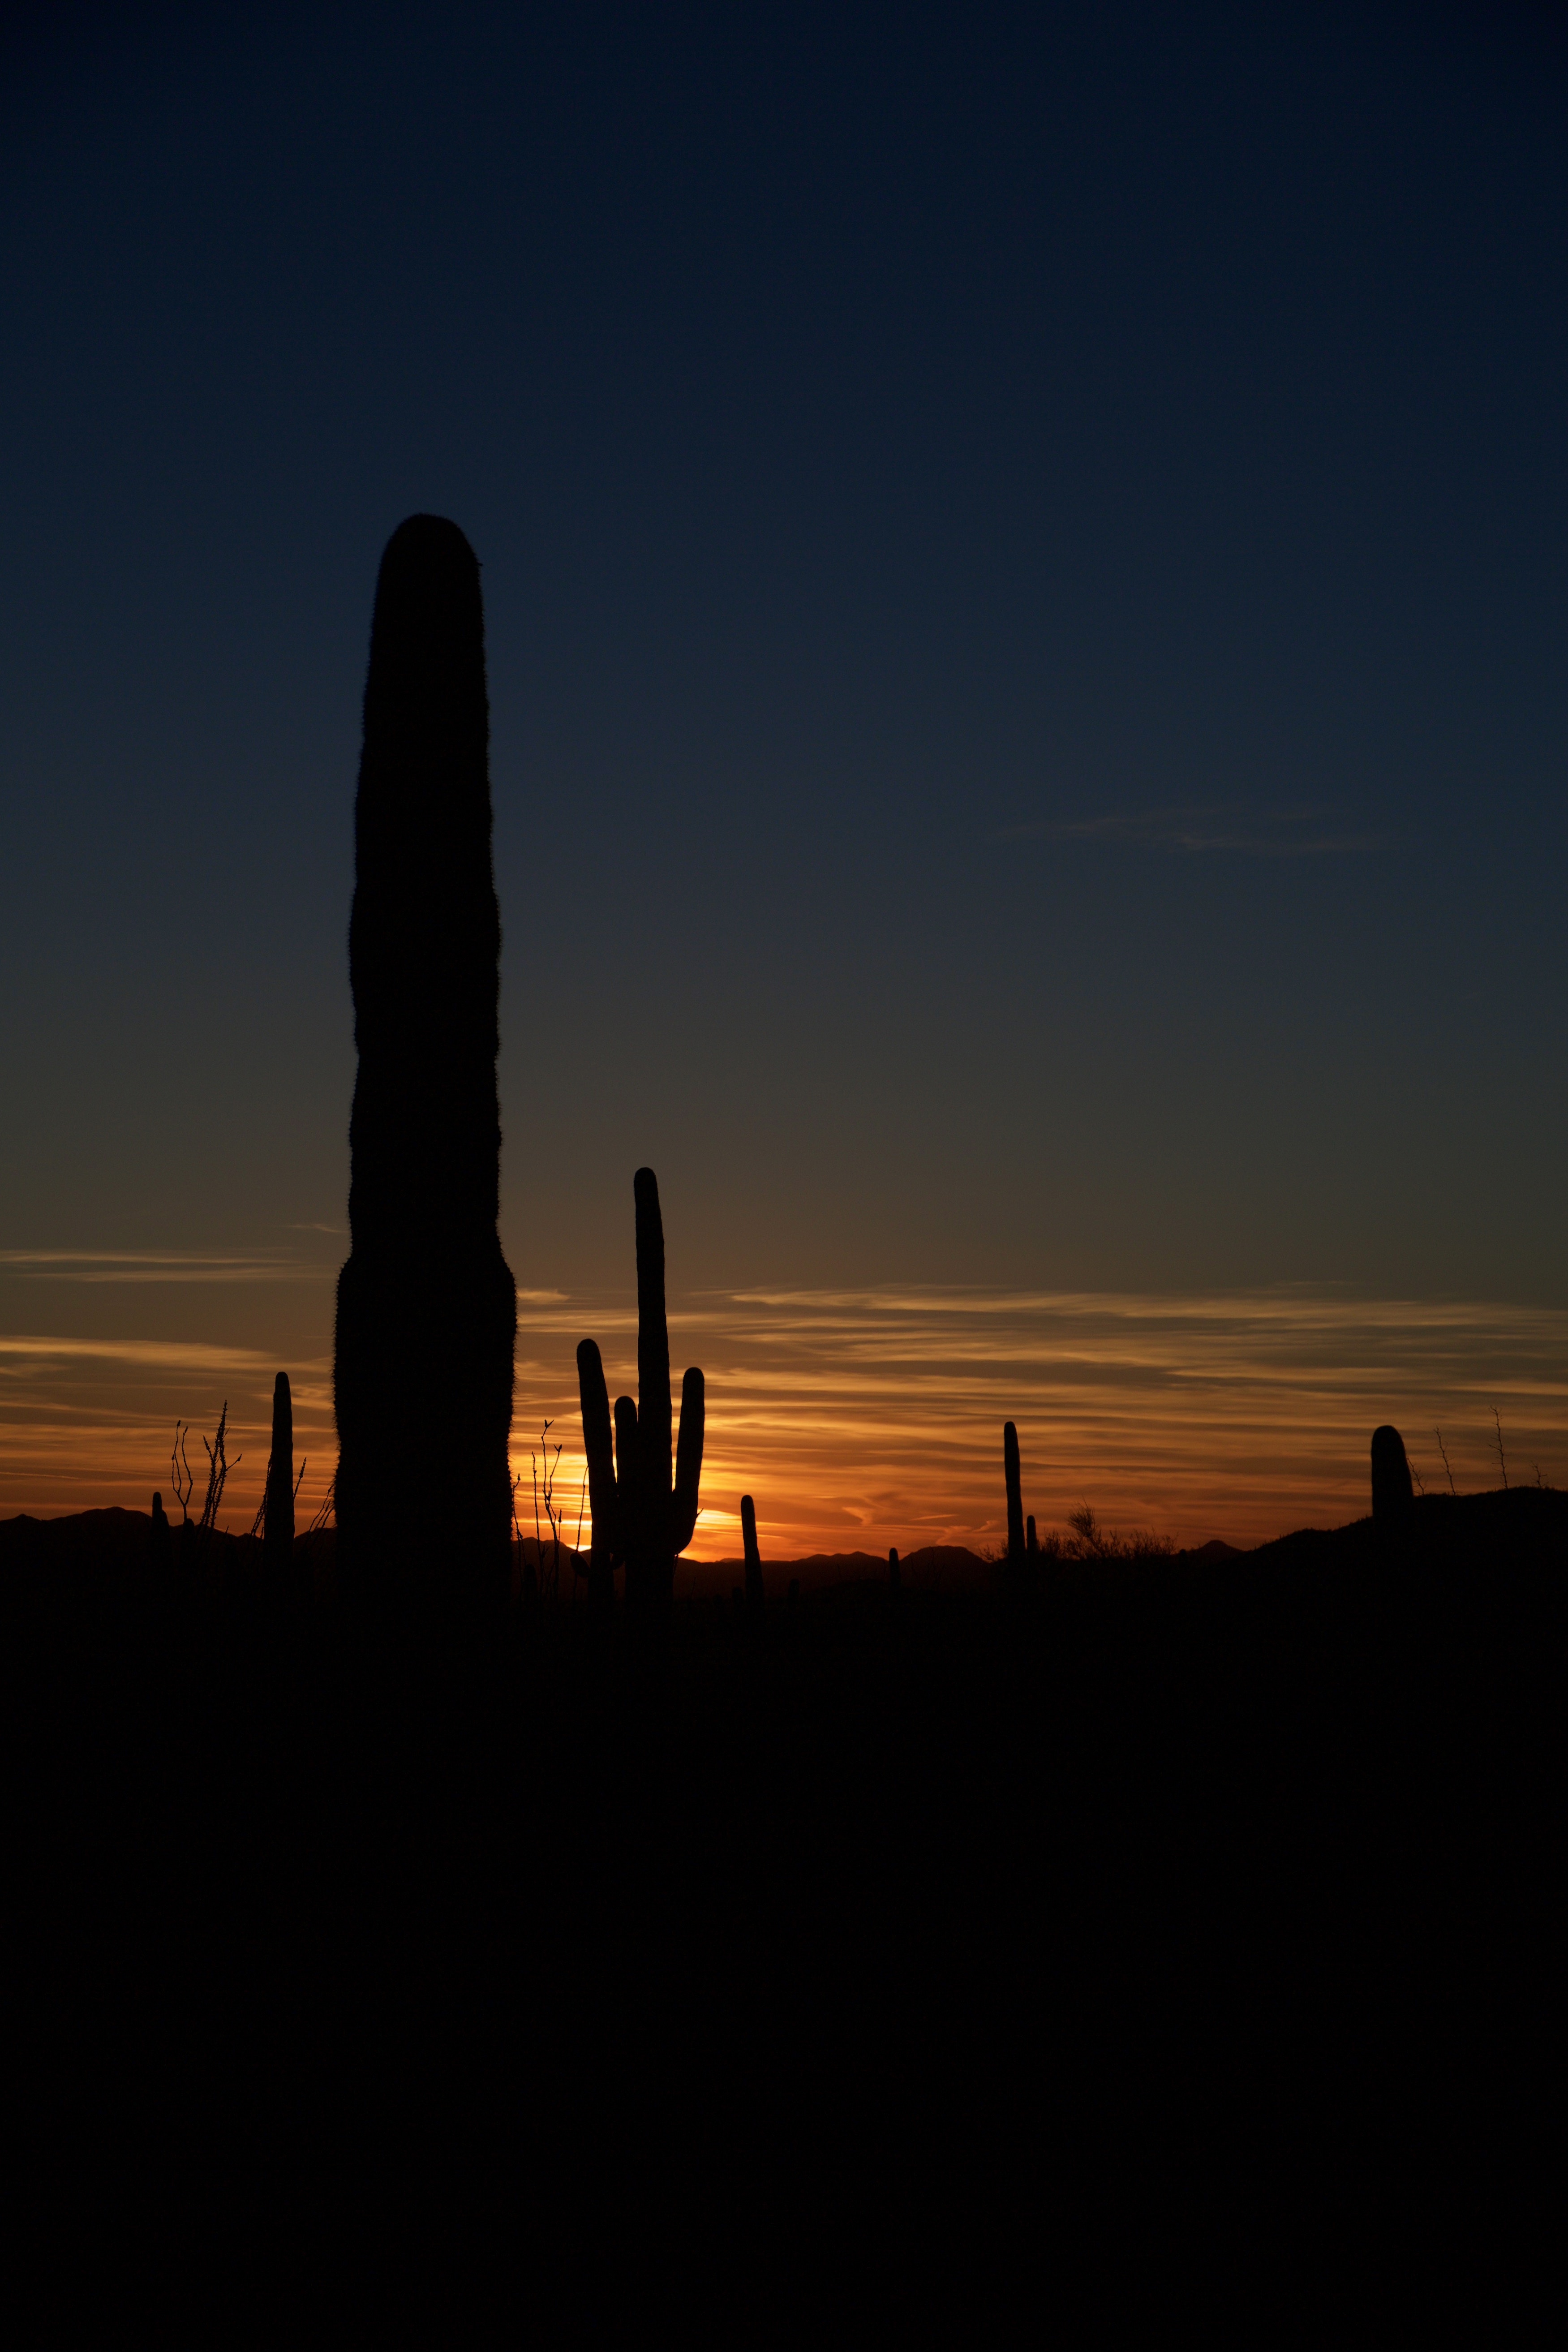 cactuses, night, dark, outlines, darkness, valley